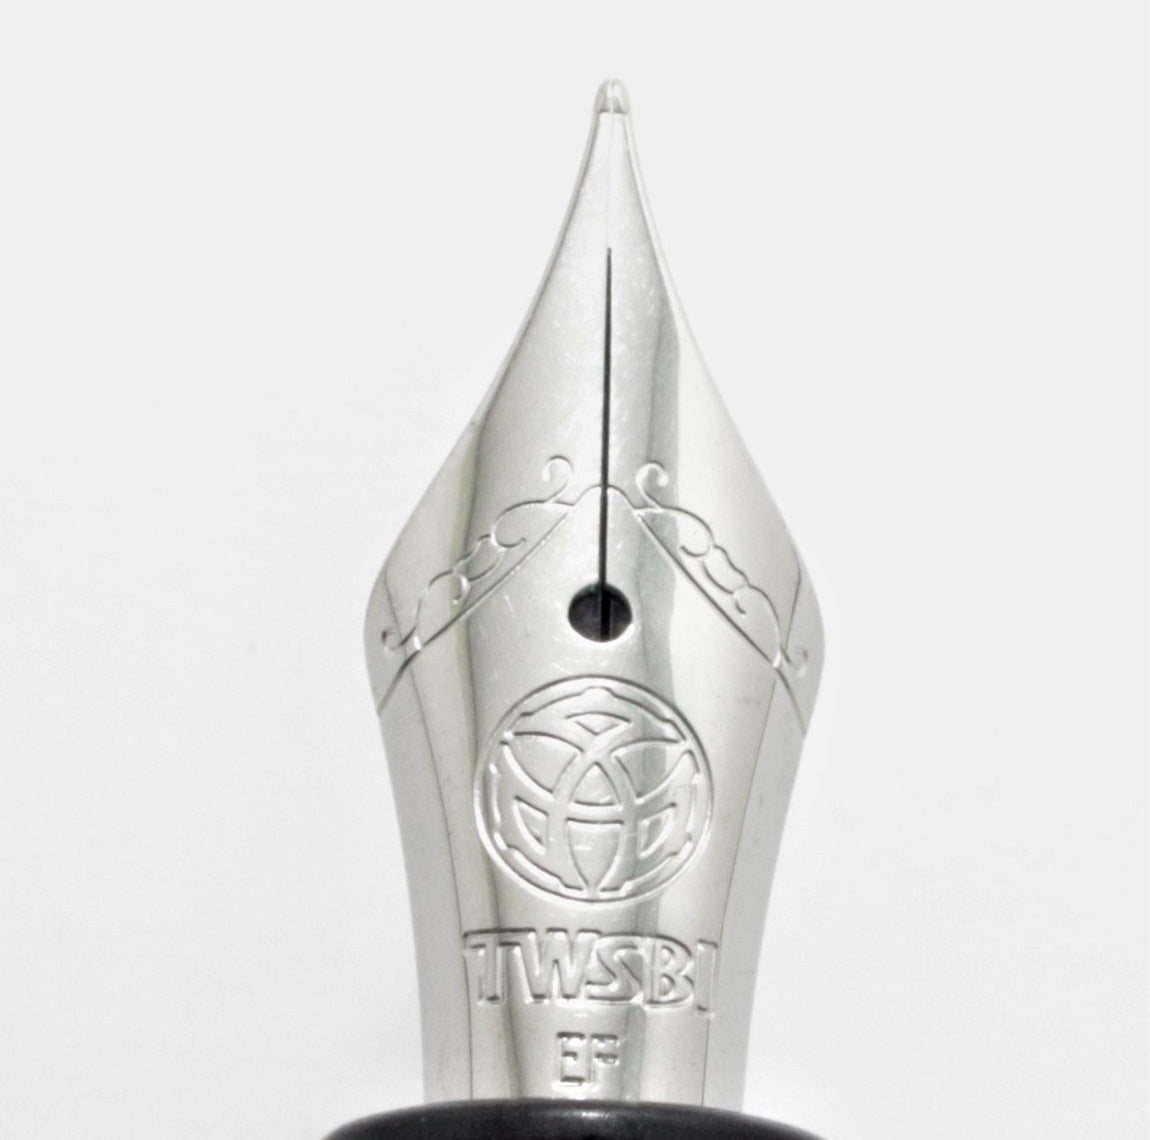 [TWSBI] Diamond mini Fountain Pen